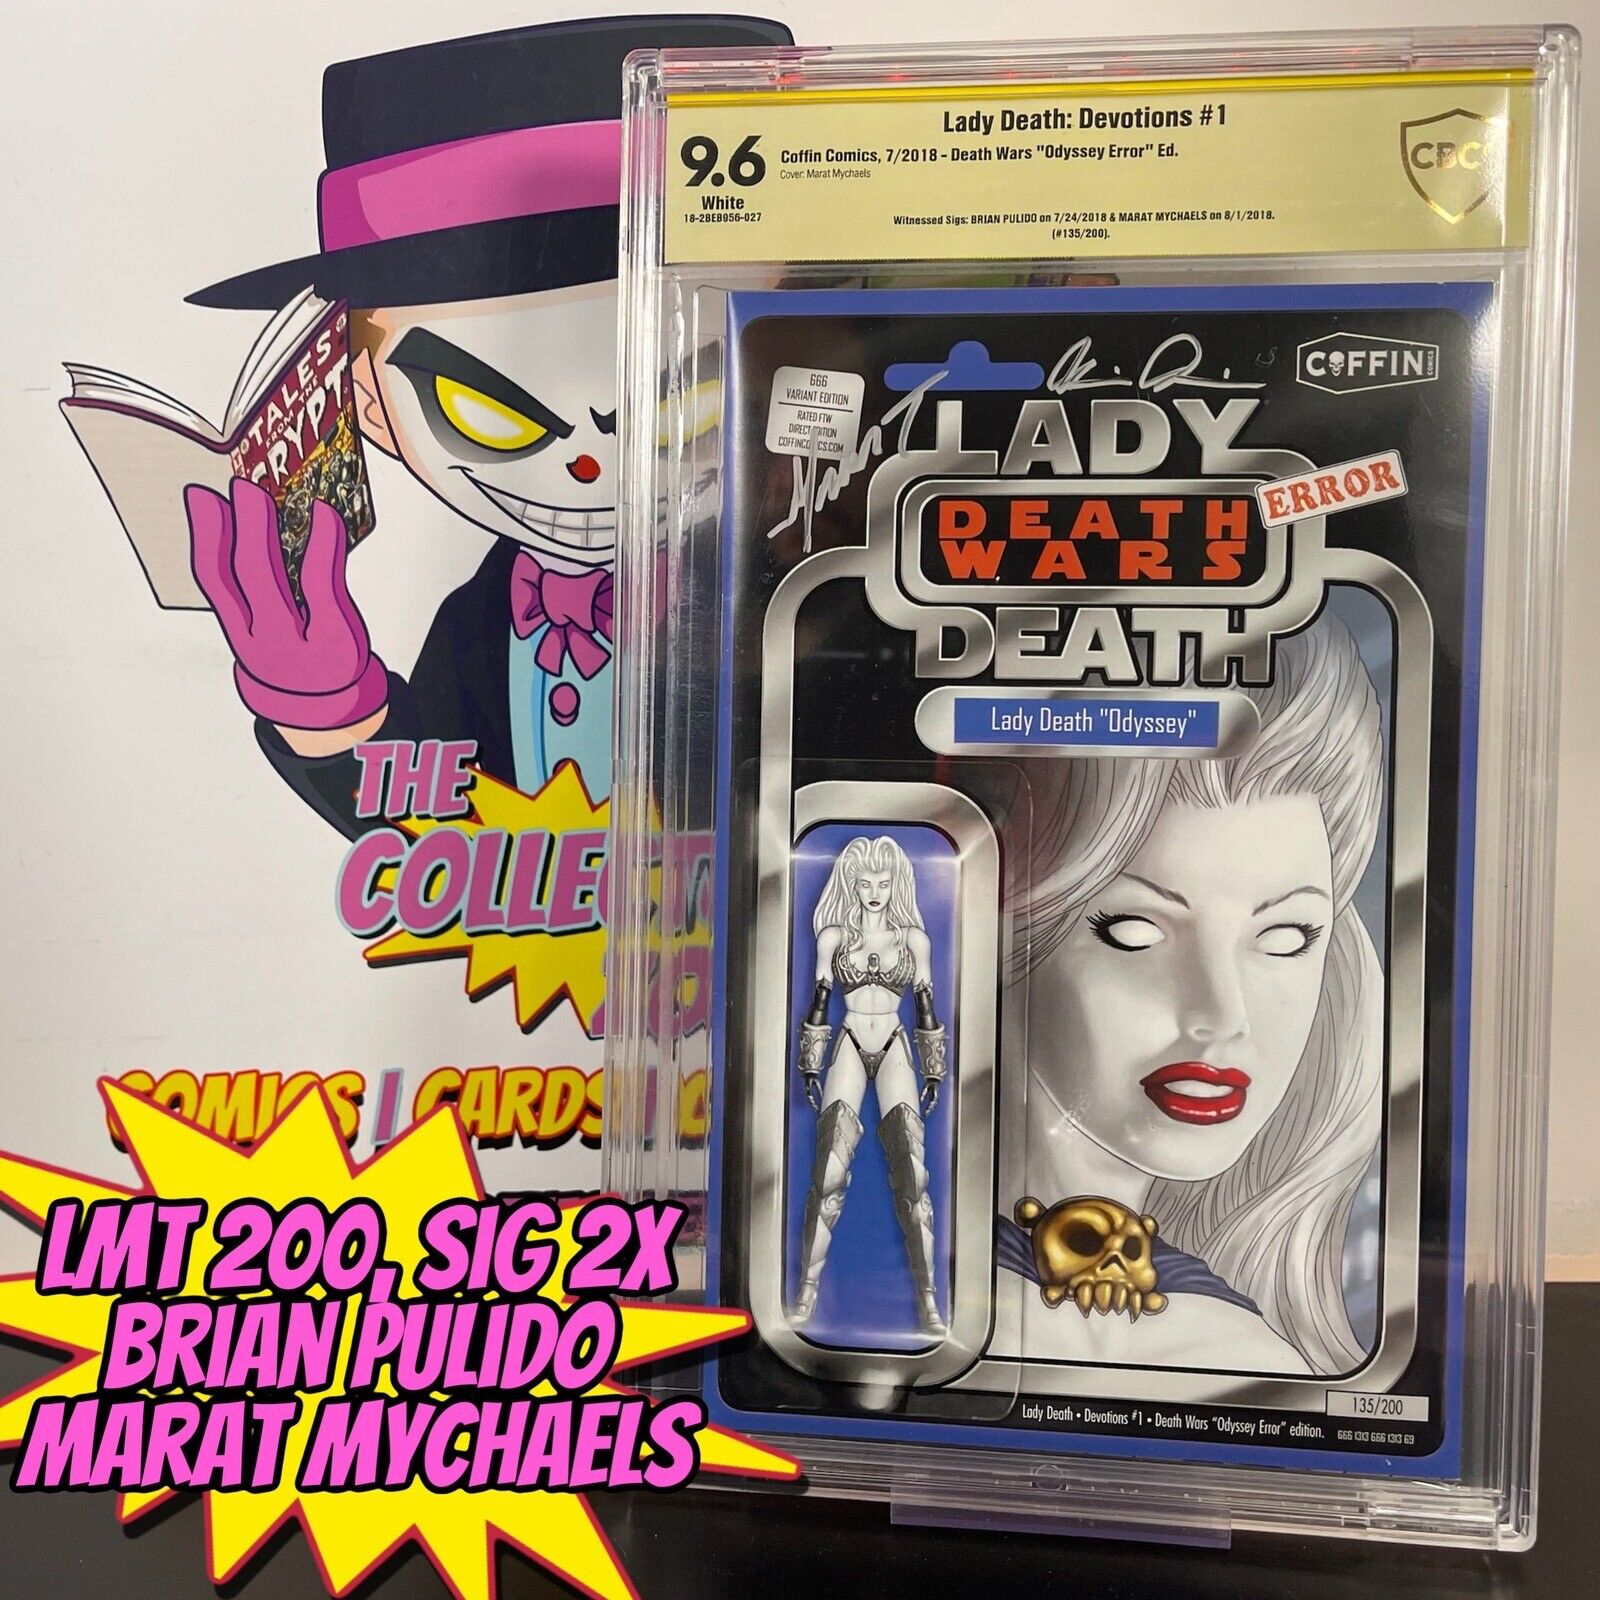 Lady Death Devotions #1 Star Wars Odyssey Signed Marat Mychaels Pulido Lmt /200